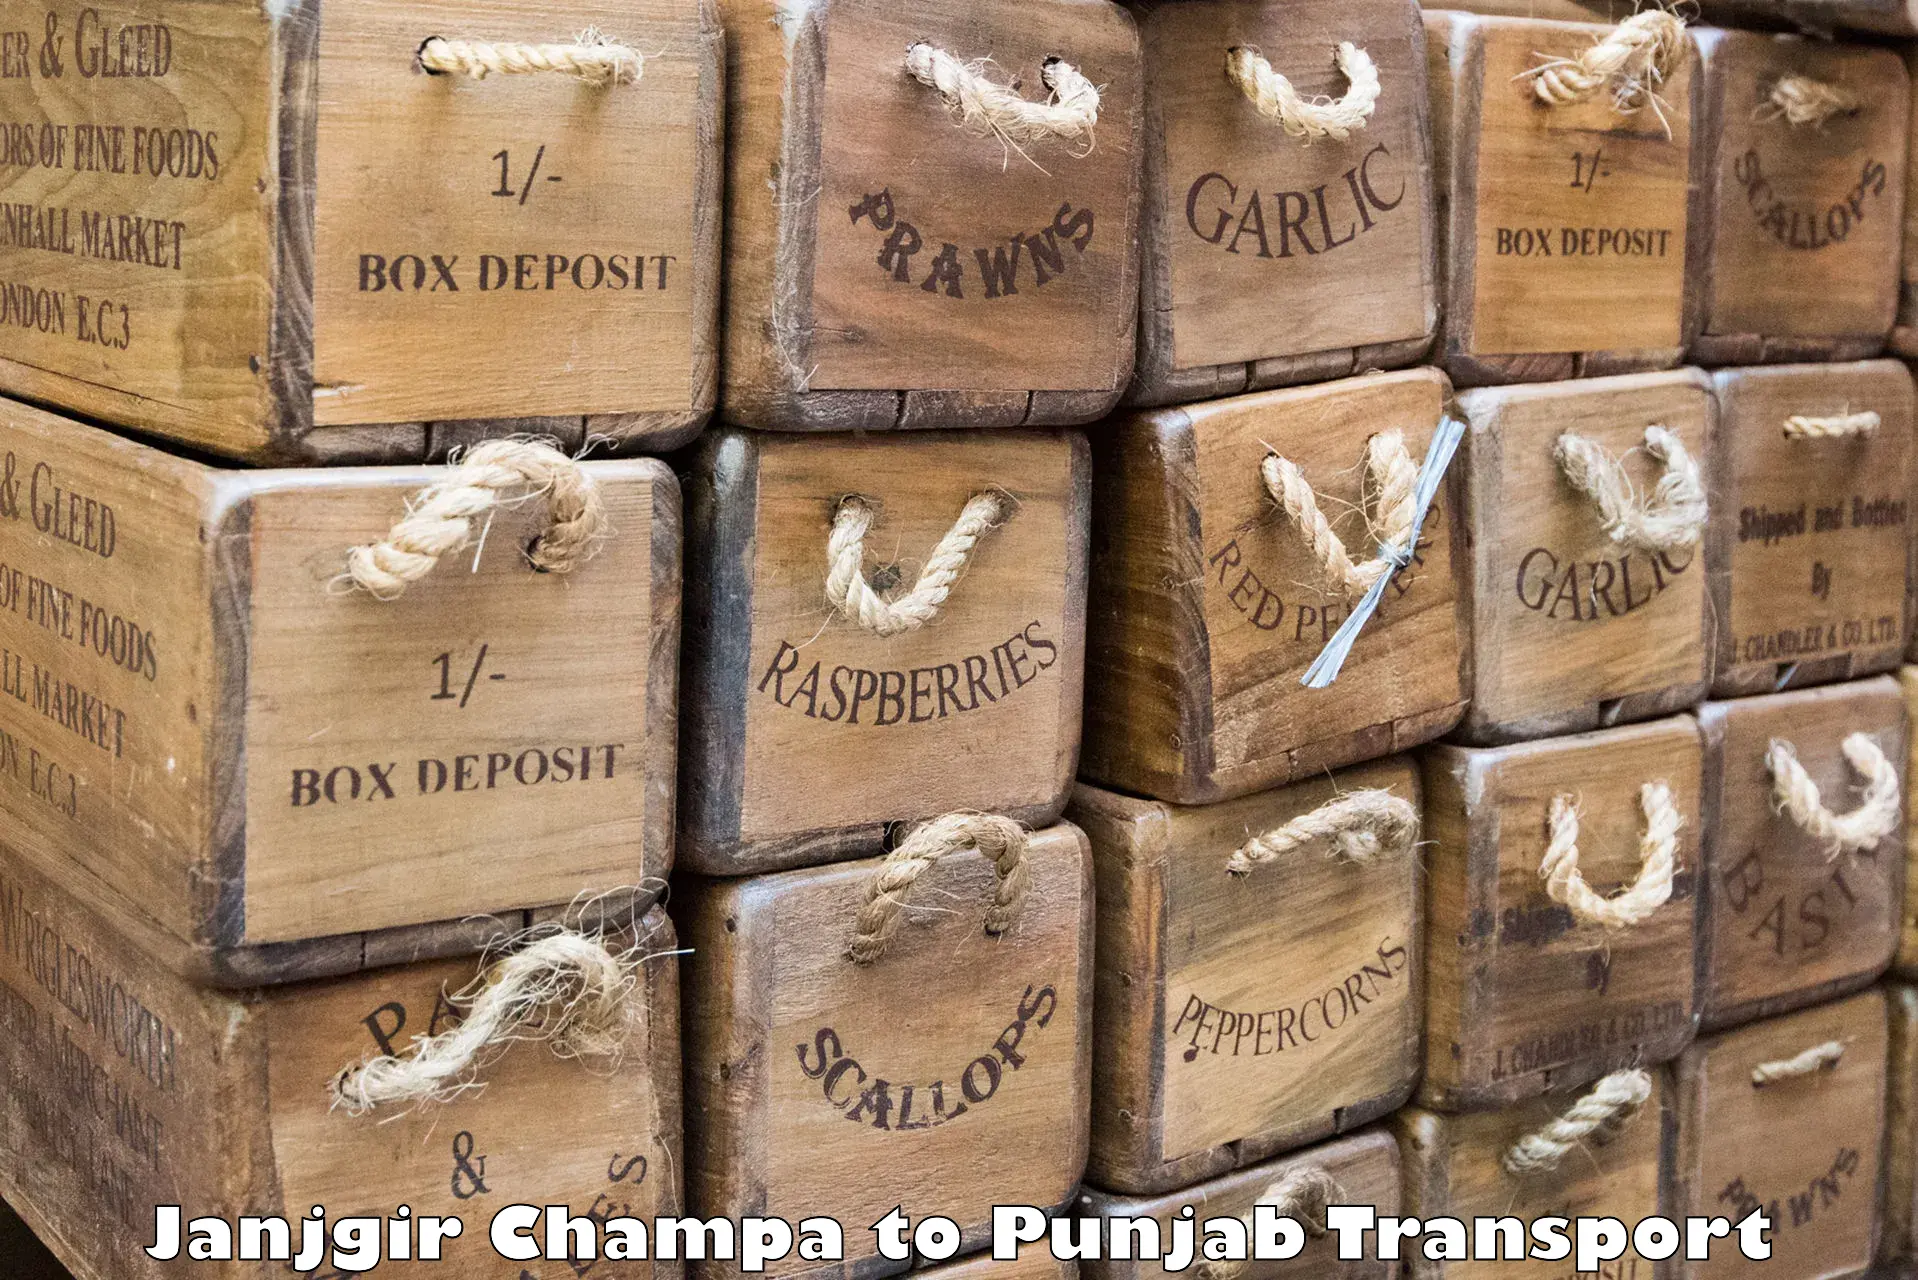 Shipping partner Janjgir Champa to Amritsar